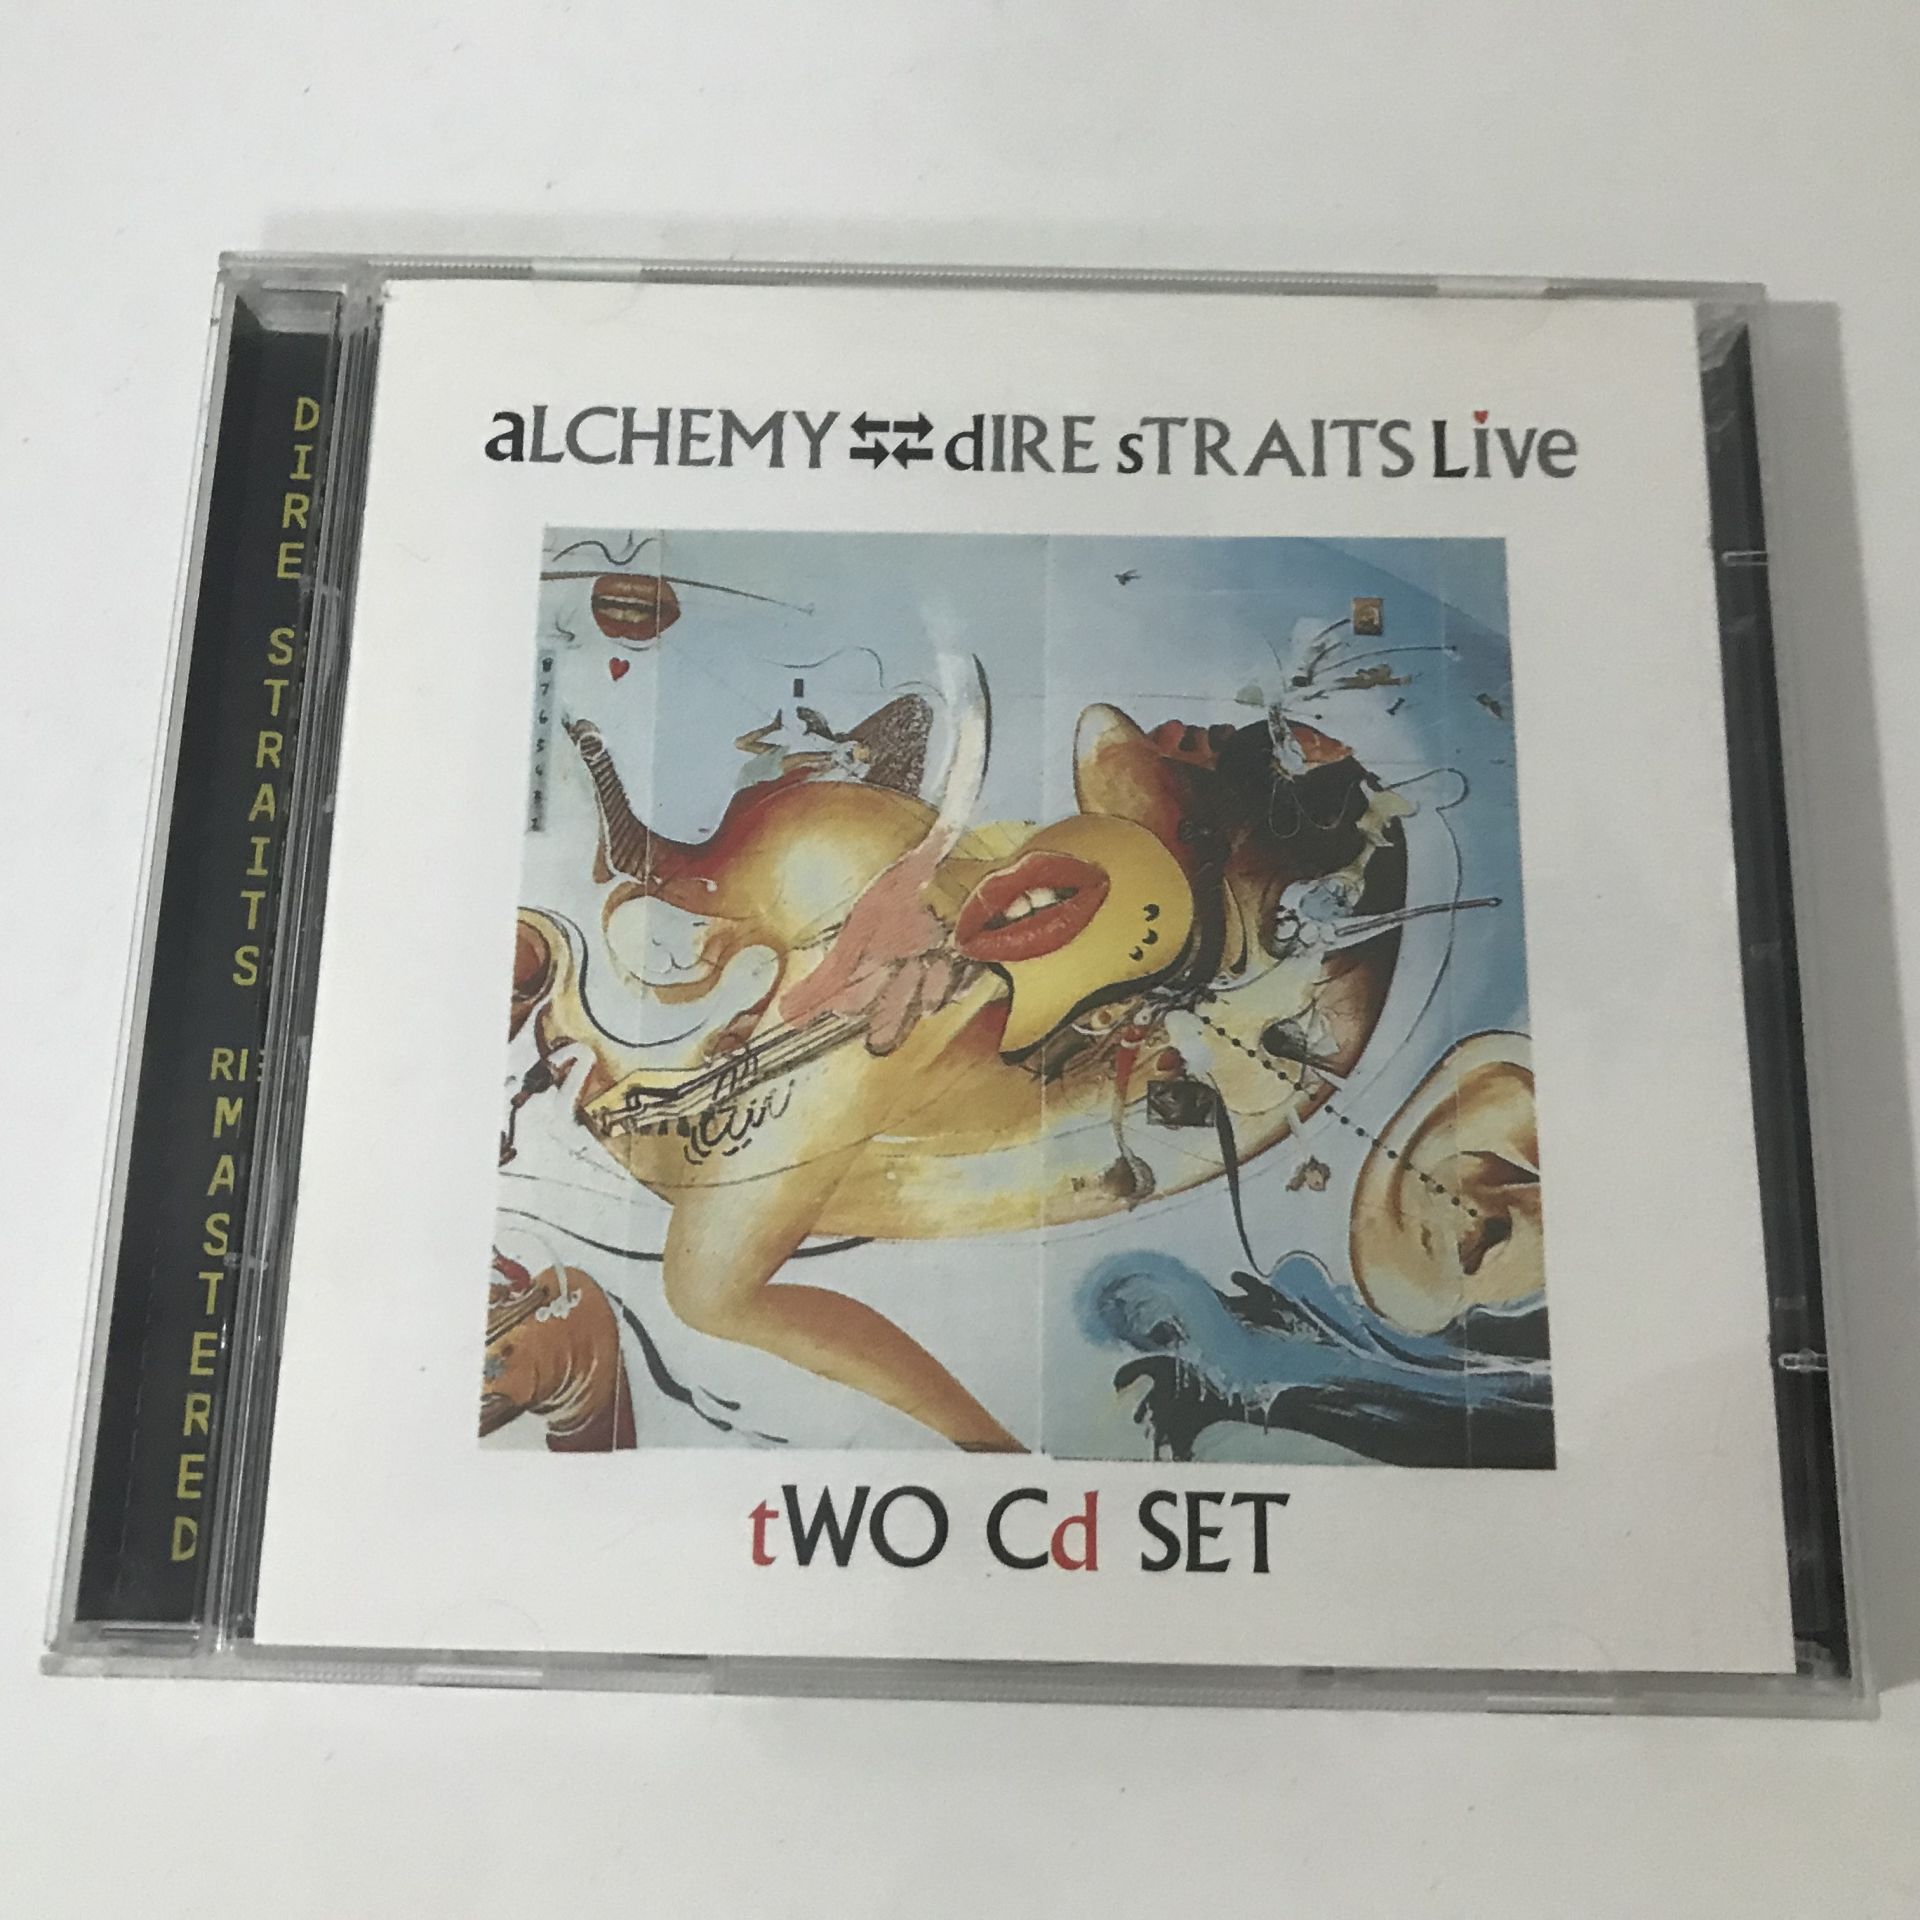 Dire Straits – Alchemy - Dire Straits Live 2 CD